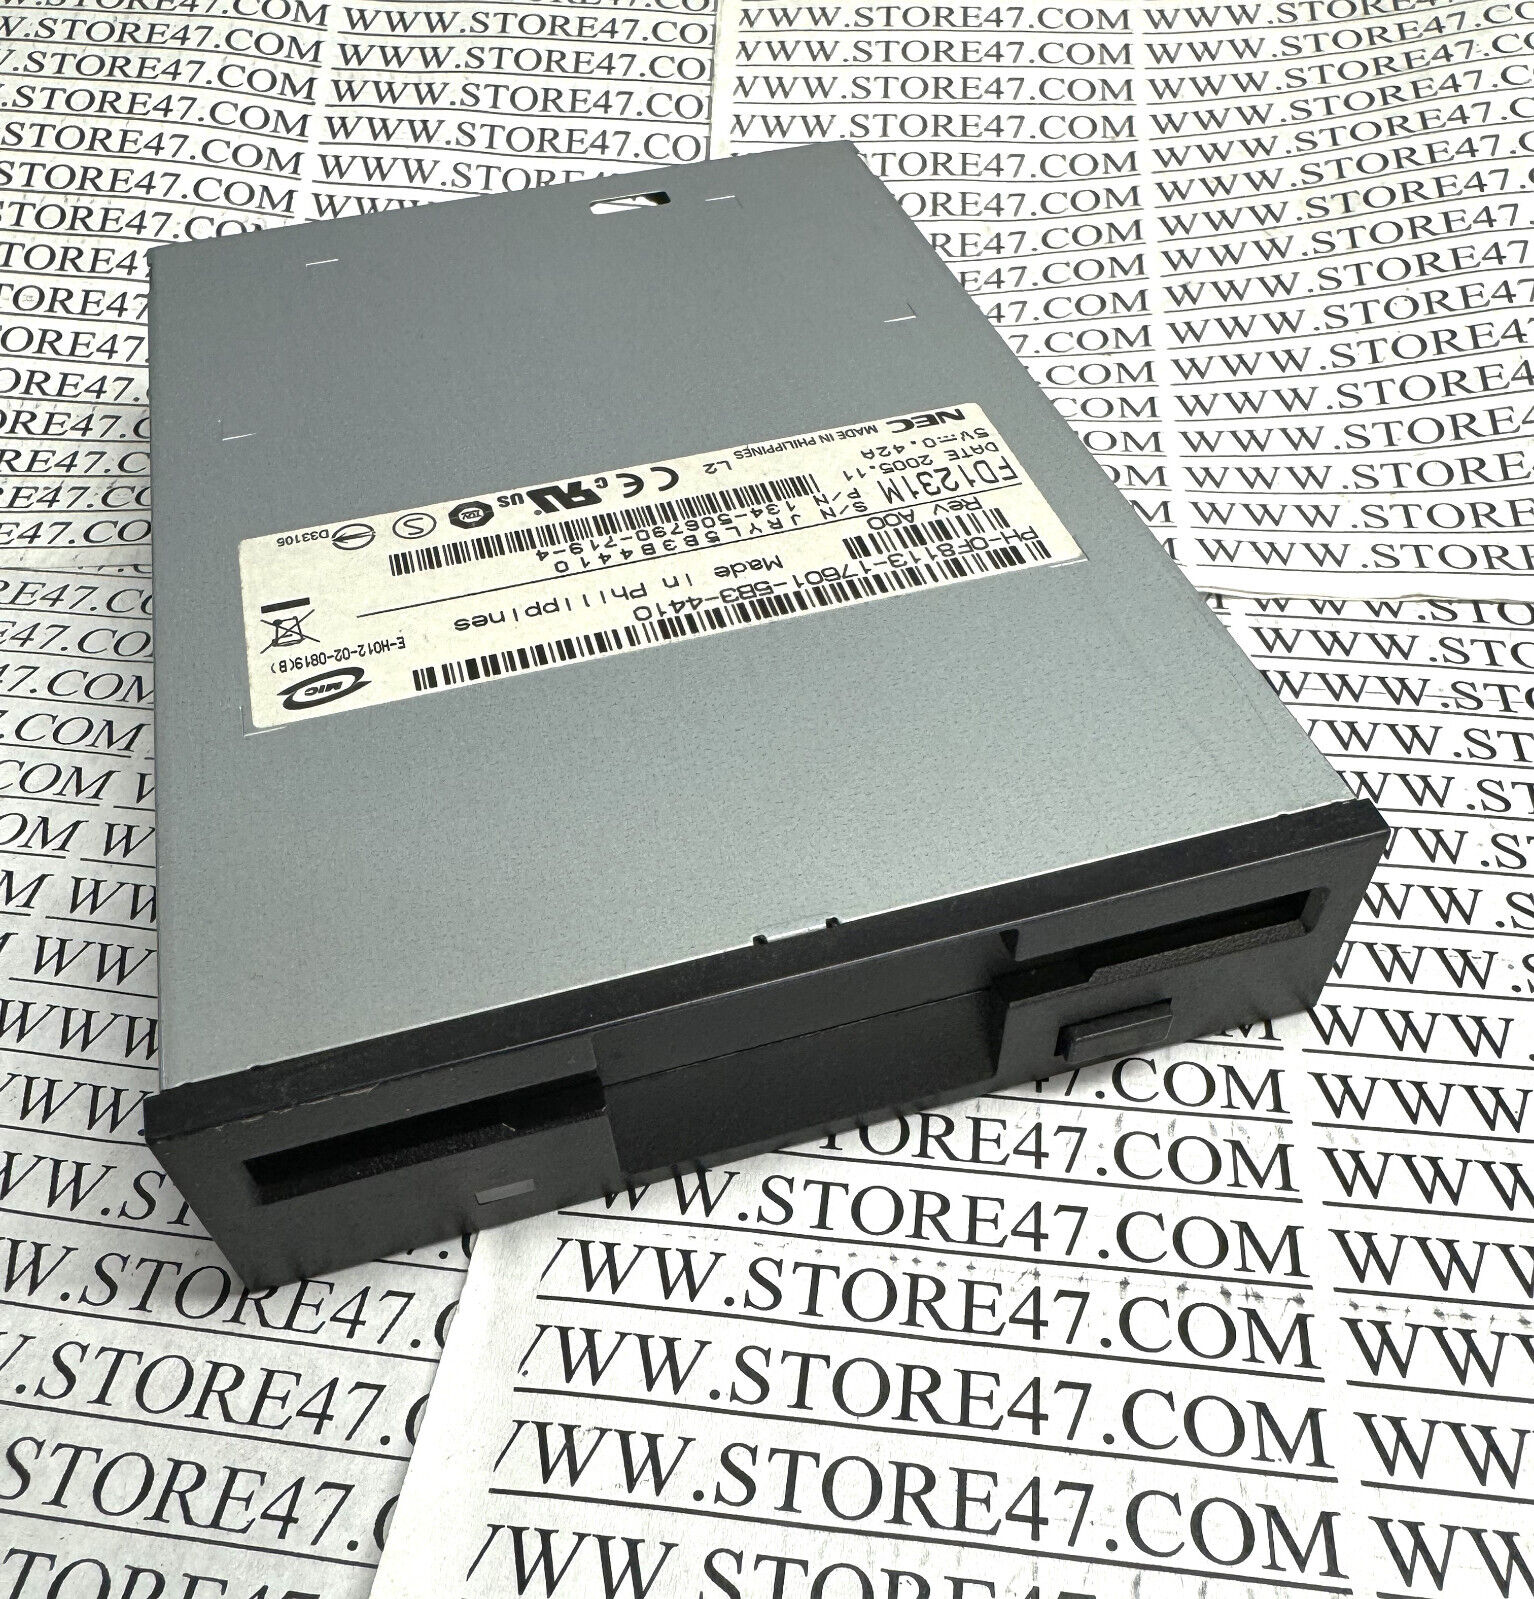 FD1231M NEC 3.5 1.44MB Internal Floppy Drive FD1231M Black Bezel Face